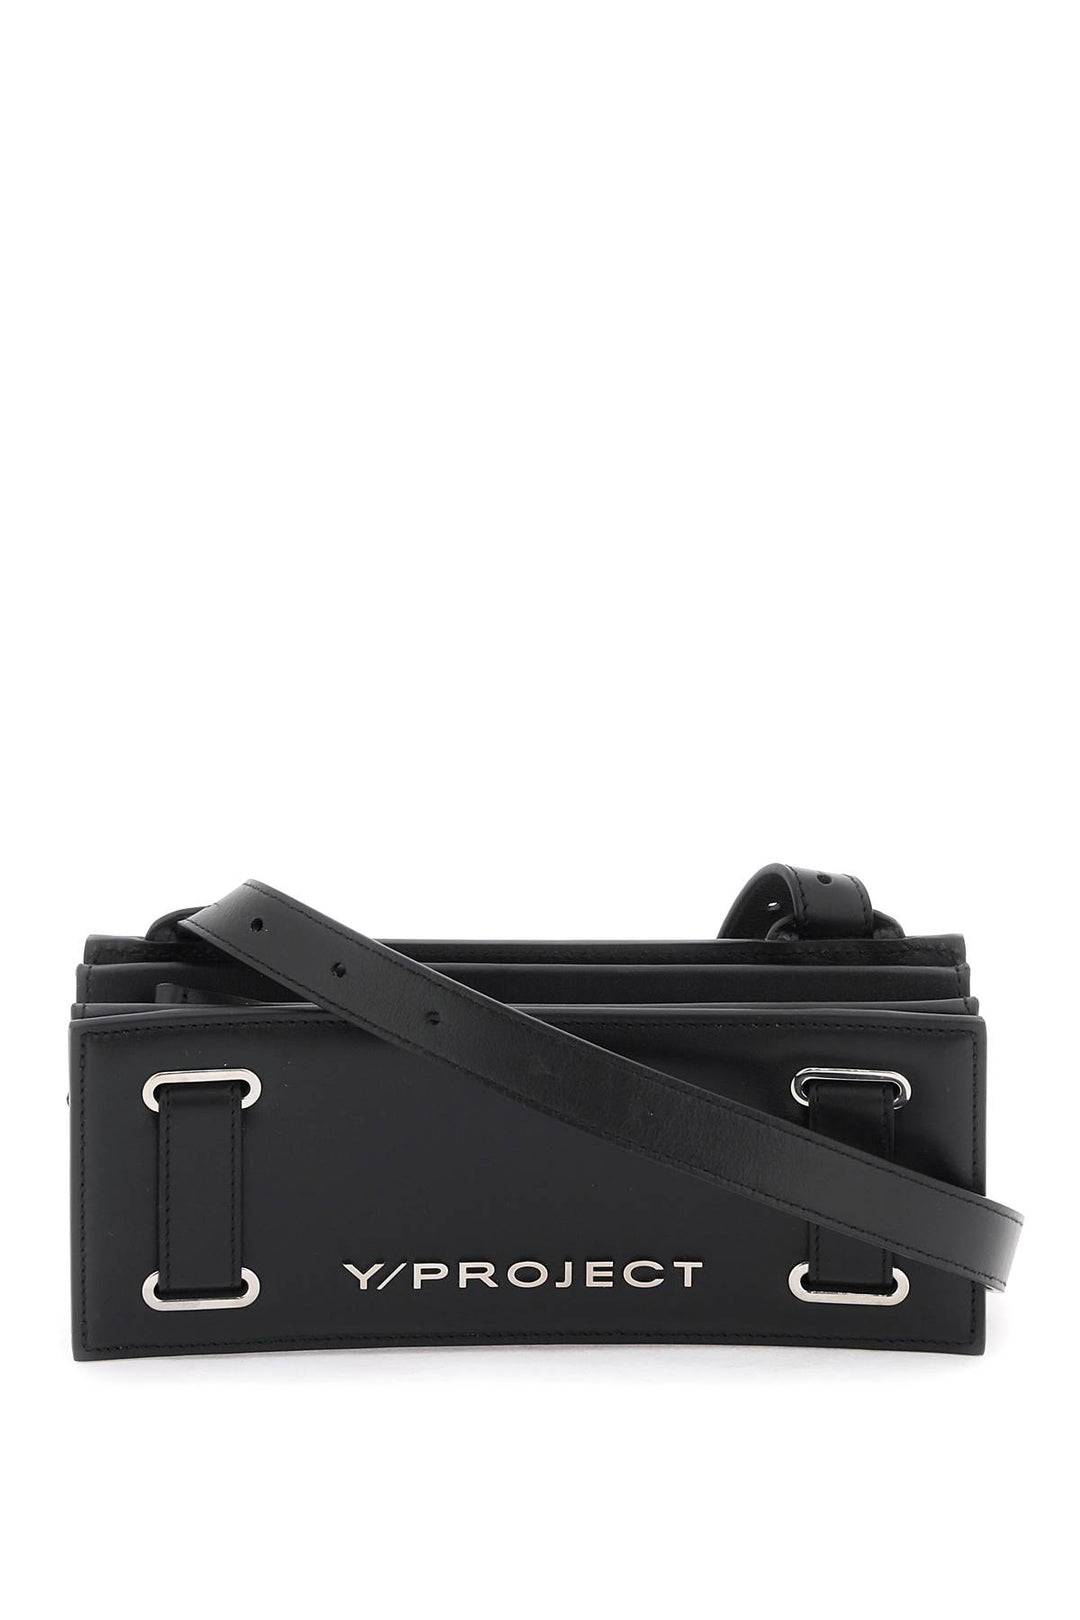 Y Project 'Mini Accordion' Crossbody Bag   Black